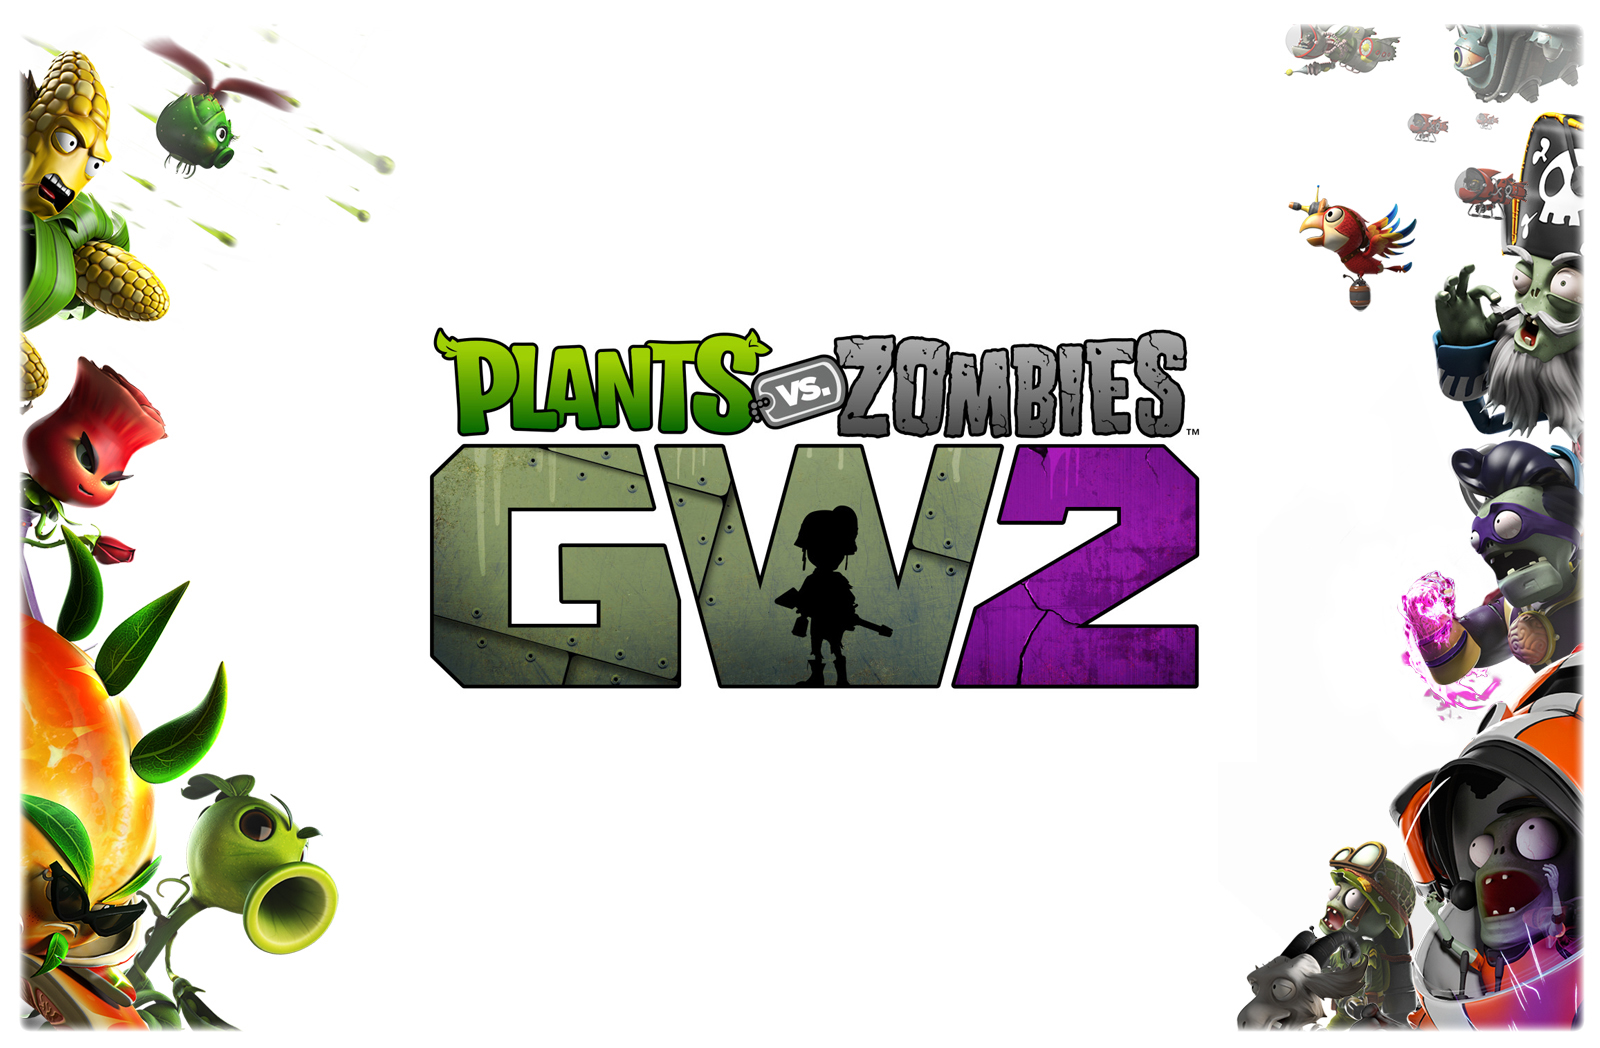 Plants vs Zombies: Garden Warfare review